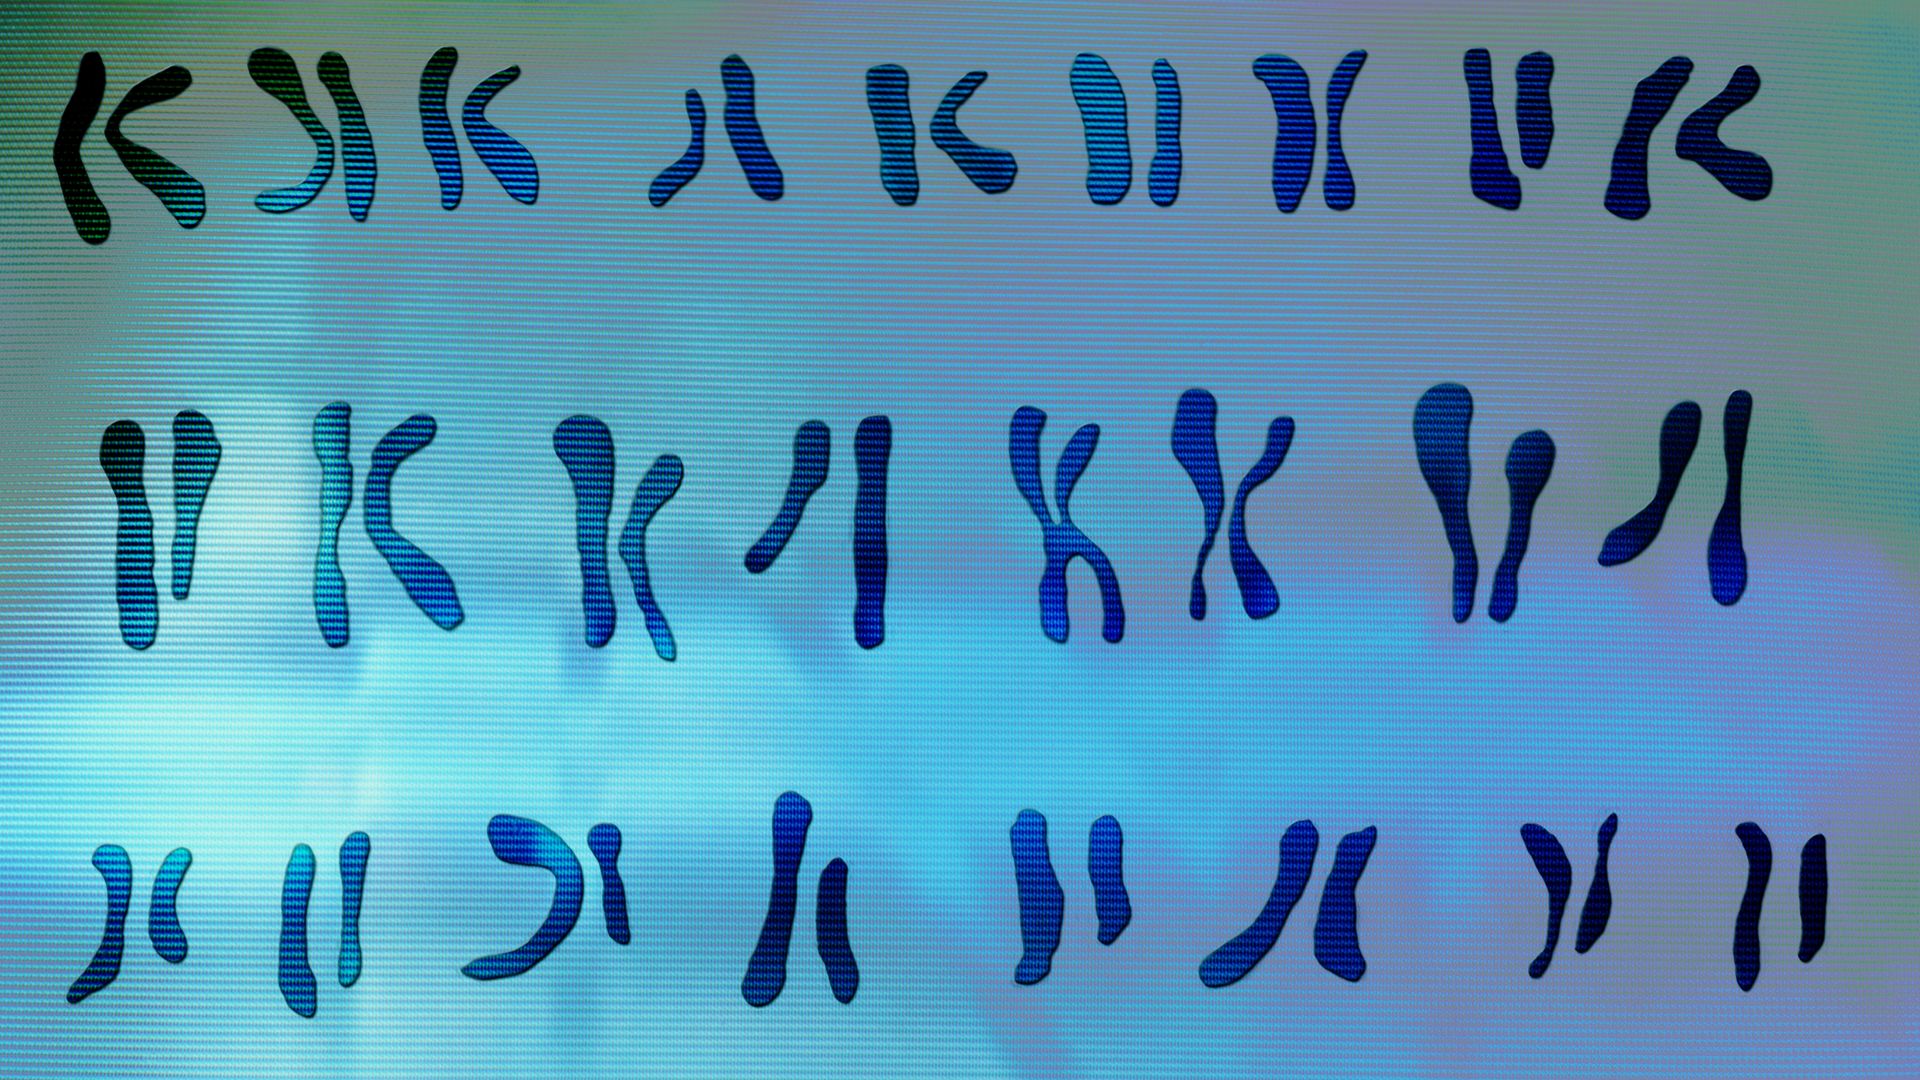 Human chromosome pairs